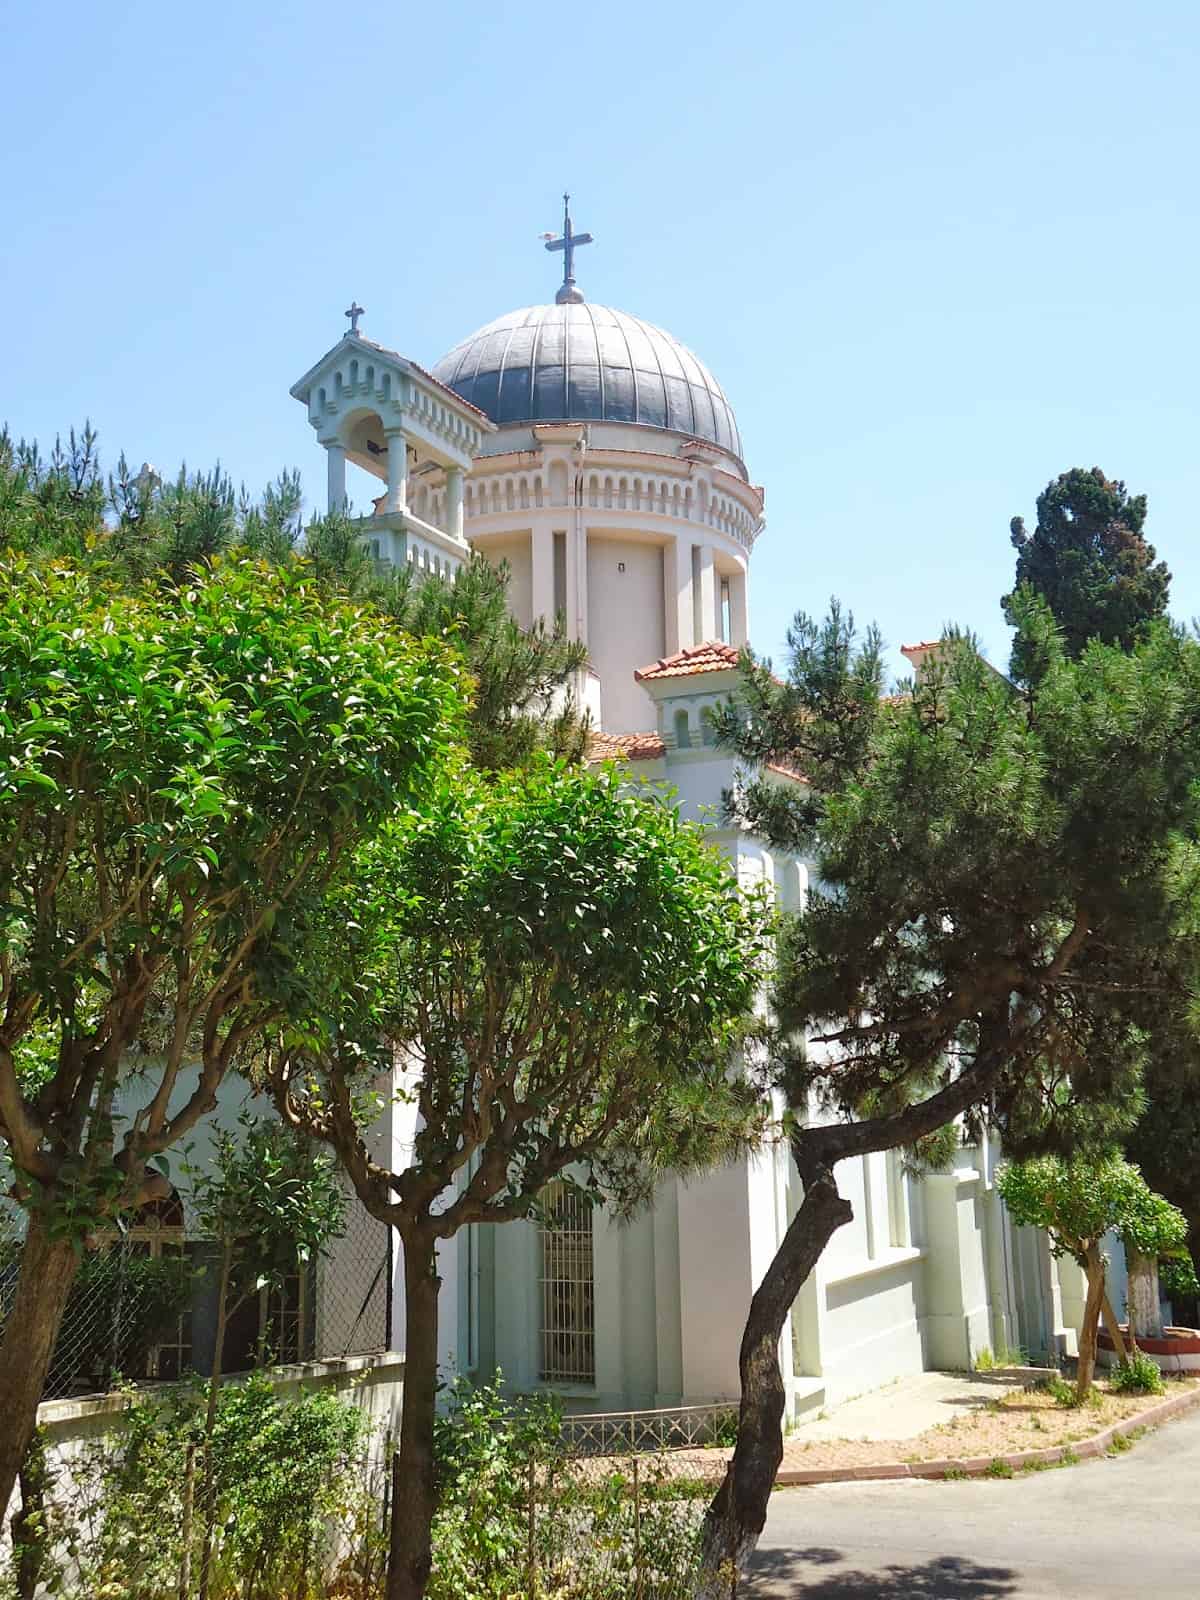 St. John Greek Orthodox Church on Burgazada, Princes' Islands, Istanbul, Turkey